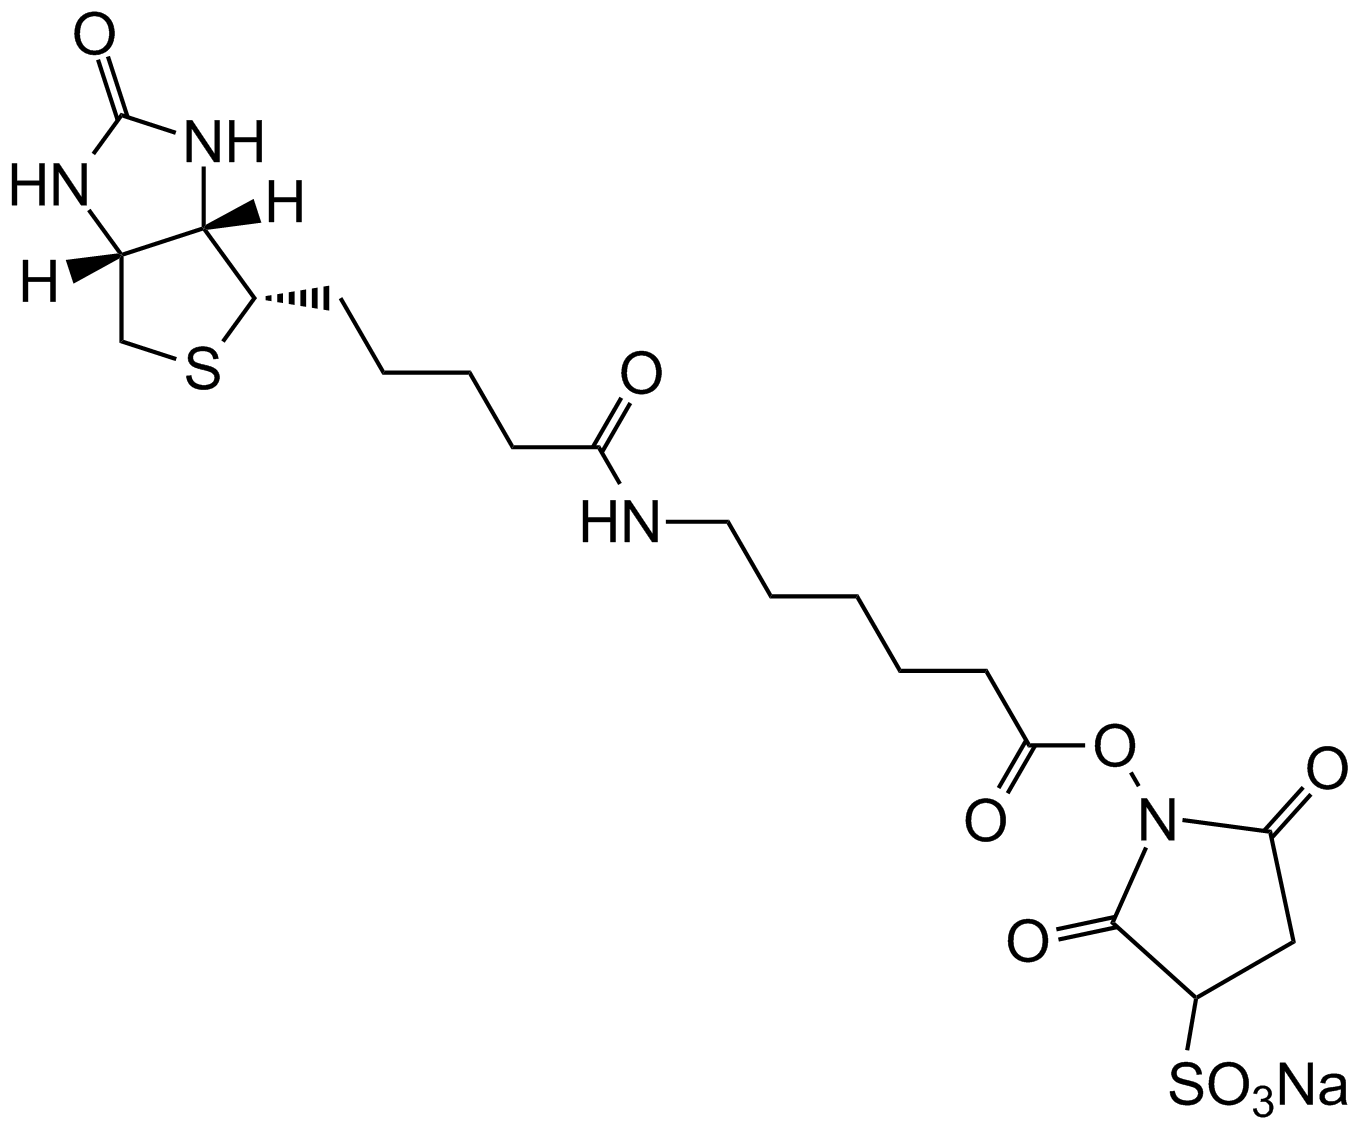 Apexbio Sulfo Nhs Lc Biotin Amine Reactive Biotinylation Agent Cas 22 0